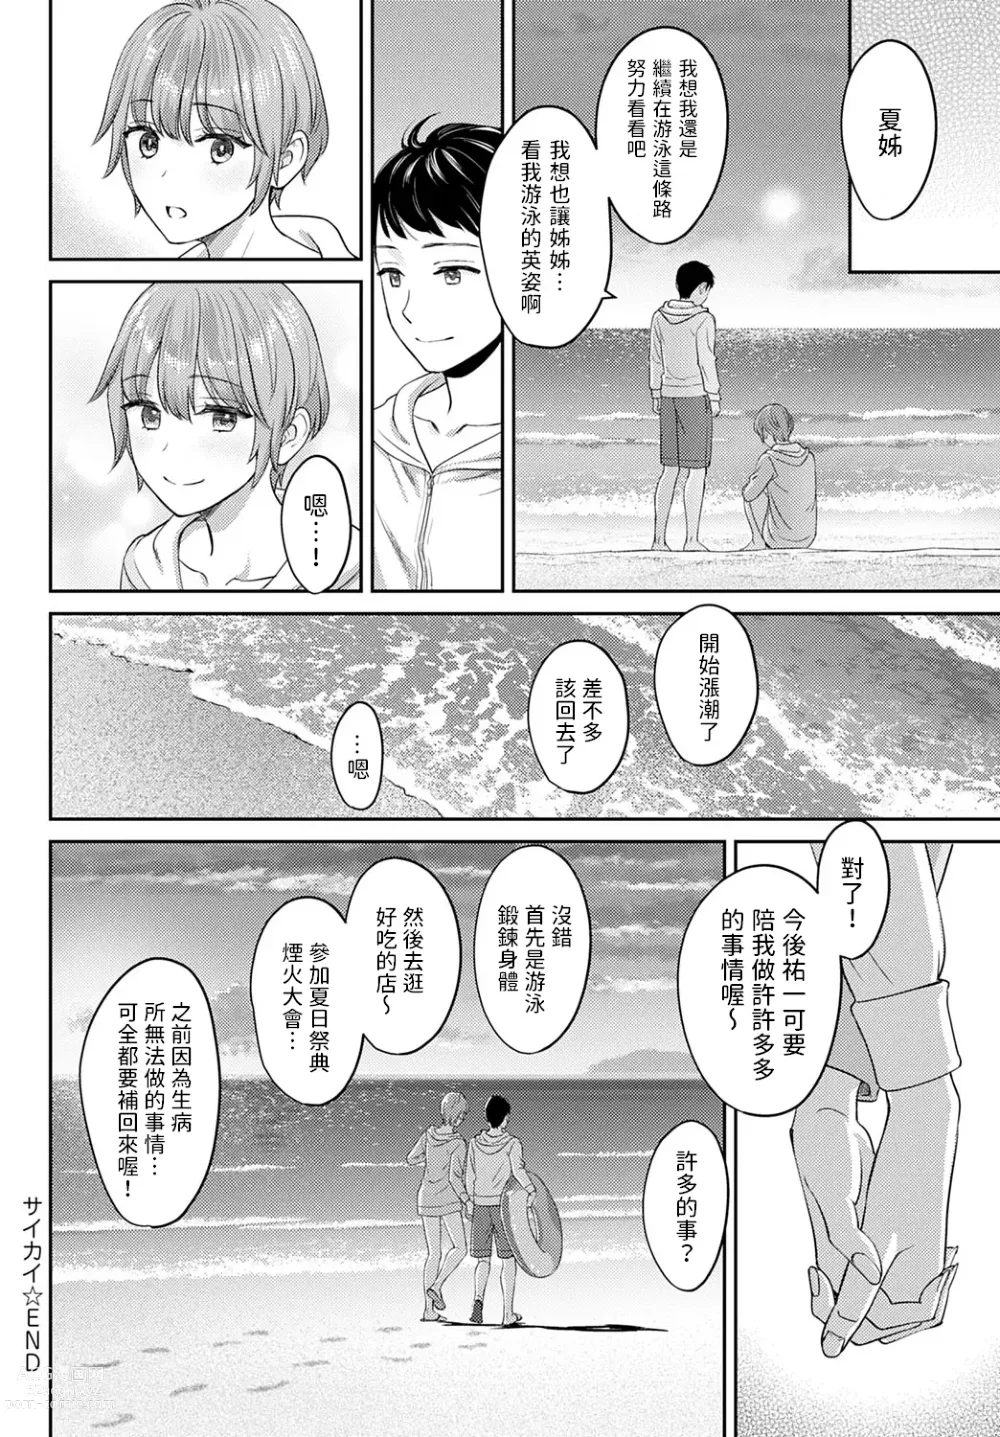 Page 28 of manga Saikai - reunion + restart